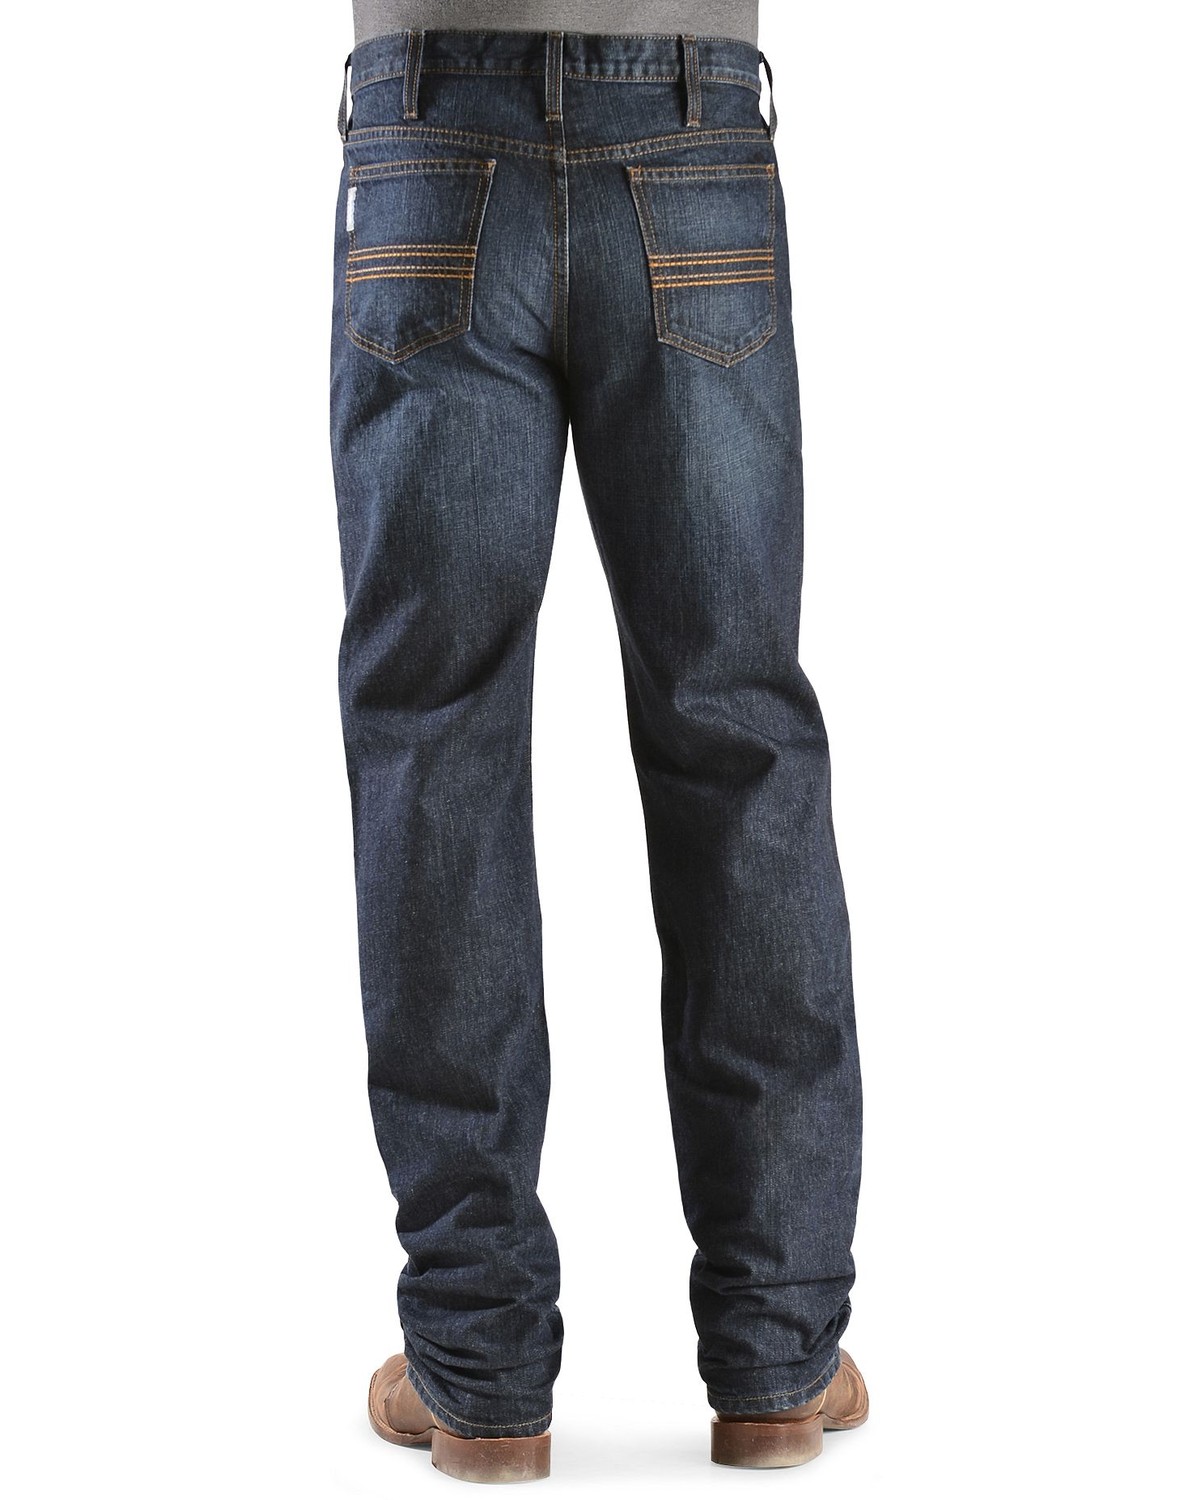 Cinch Silver Label Dark Wash Jeans - Big & Tall | Sheplers